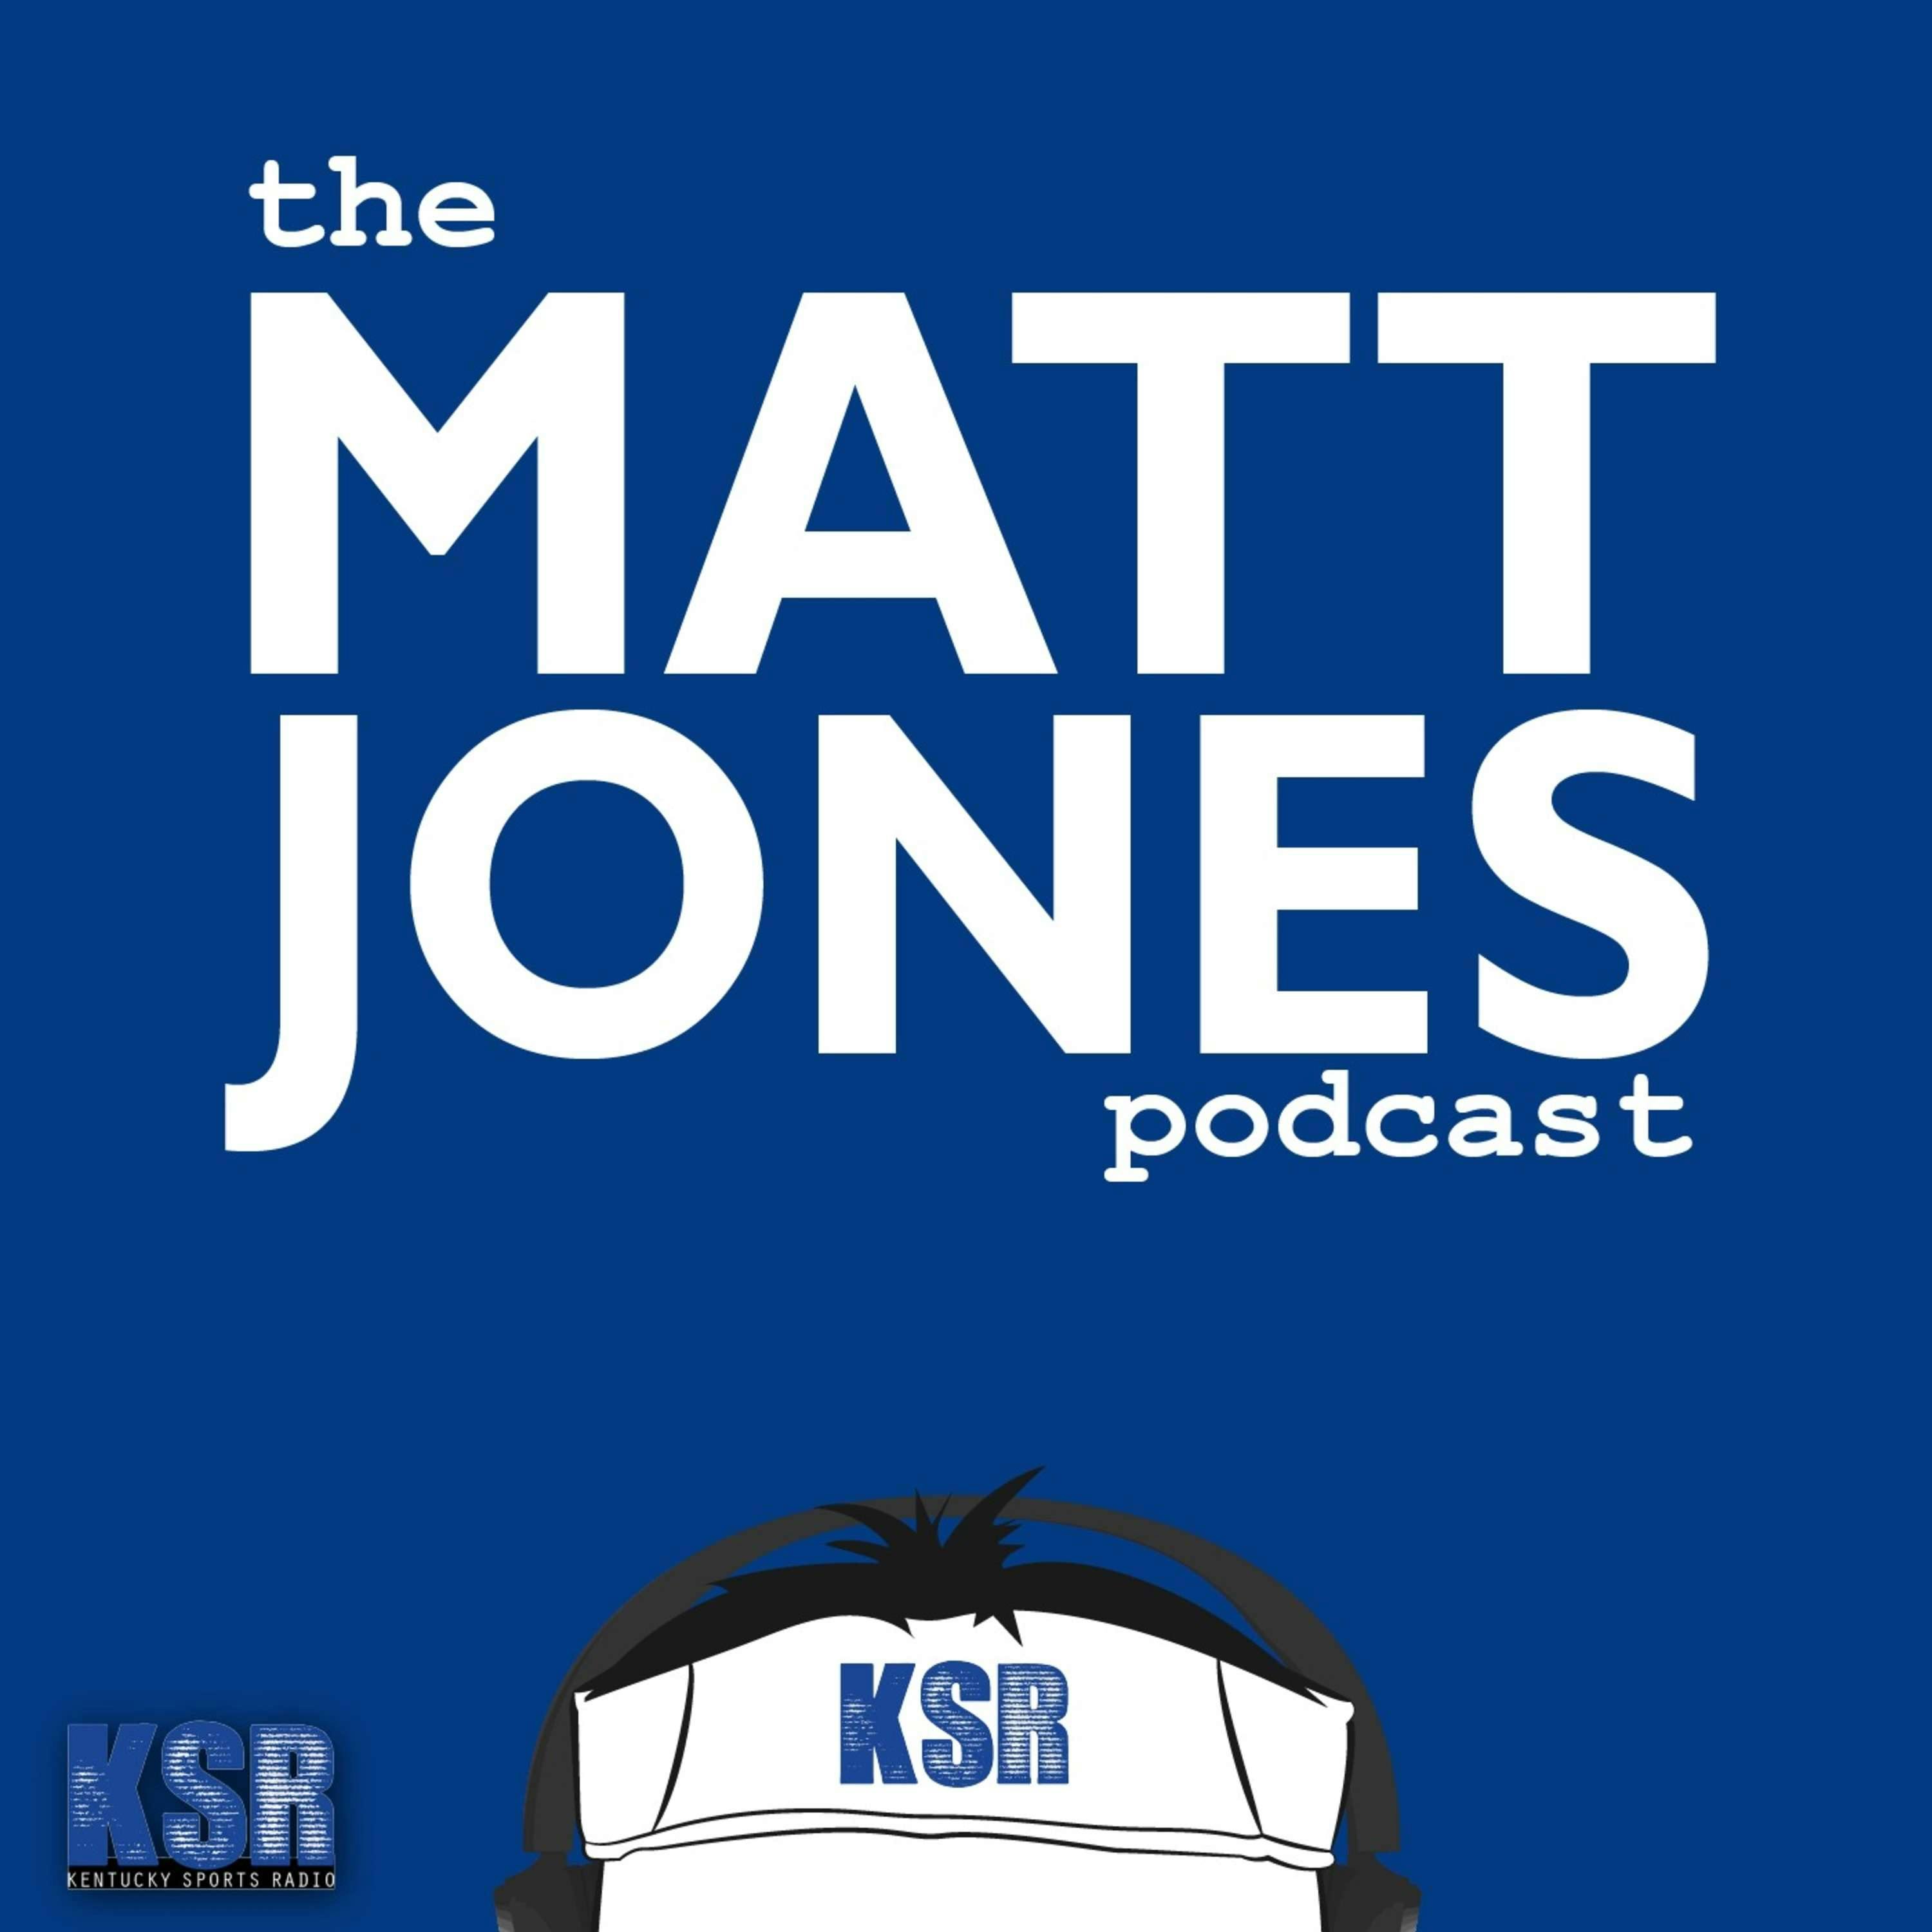 The Matt Jones Podcast: E57 Marcus Spears & Vanetti